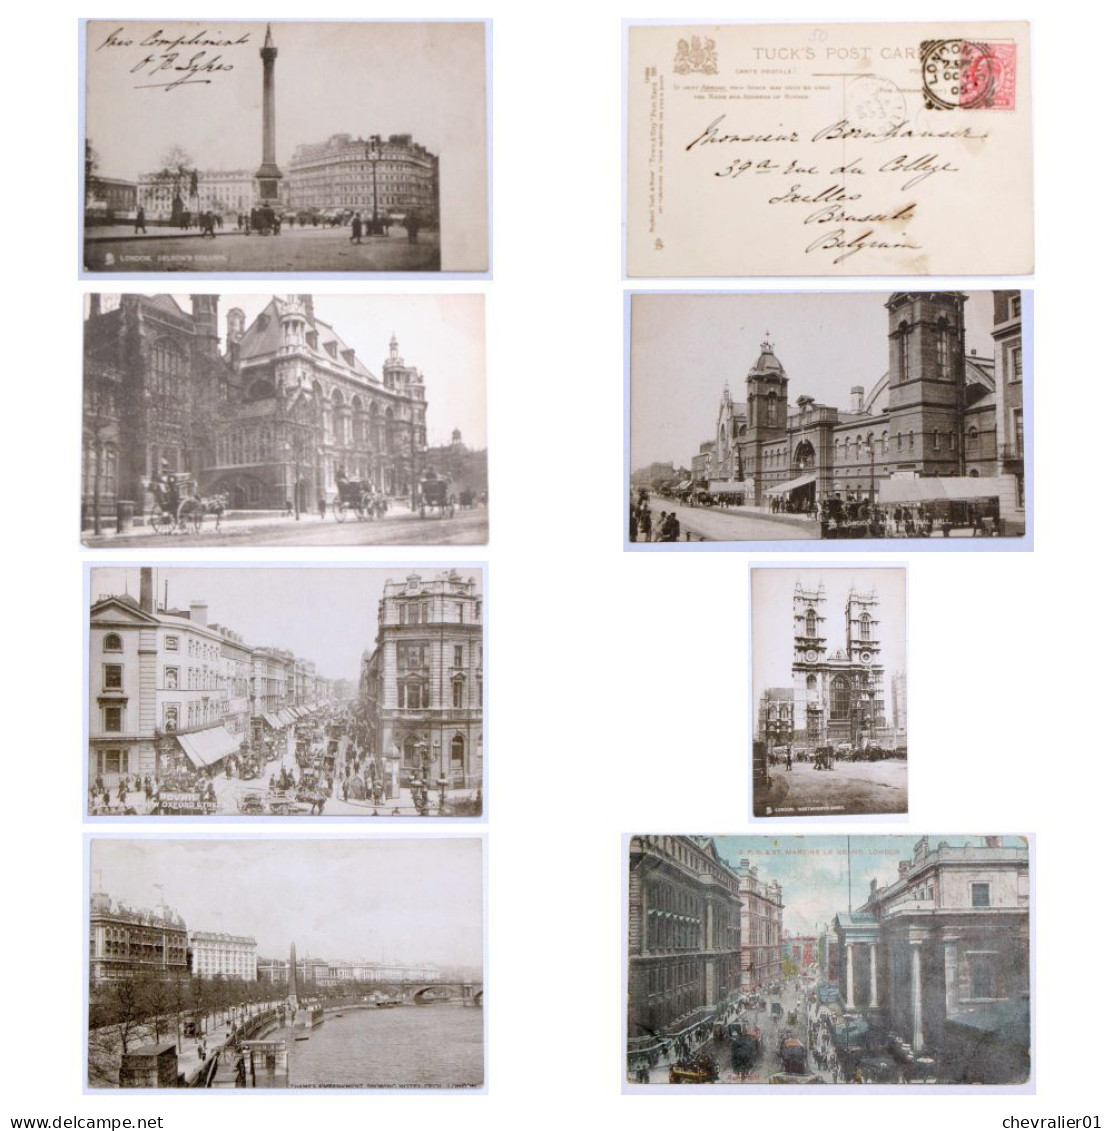 CPA-UK_London_lot de 43 cartes postales